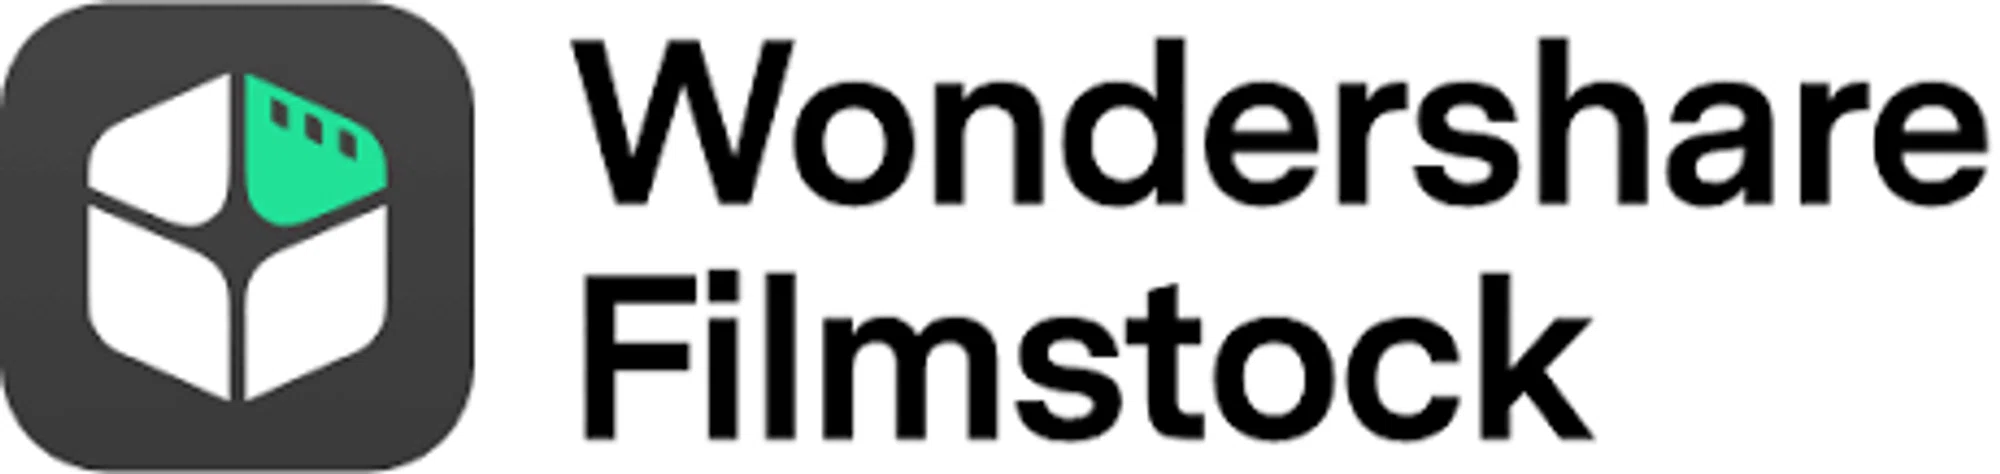 Wondershare FilmStock